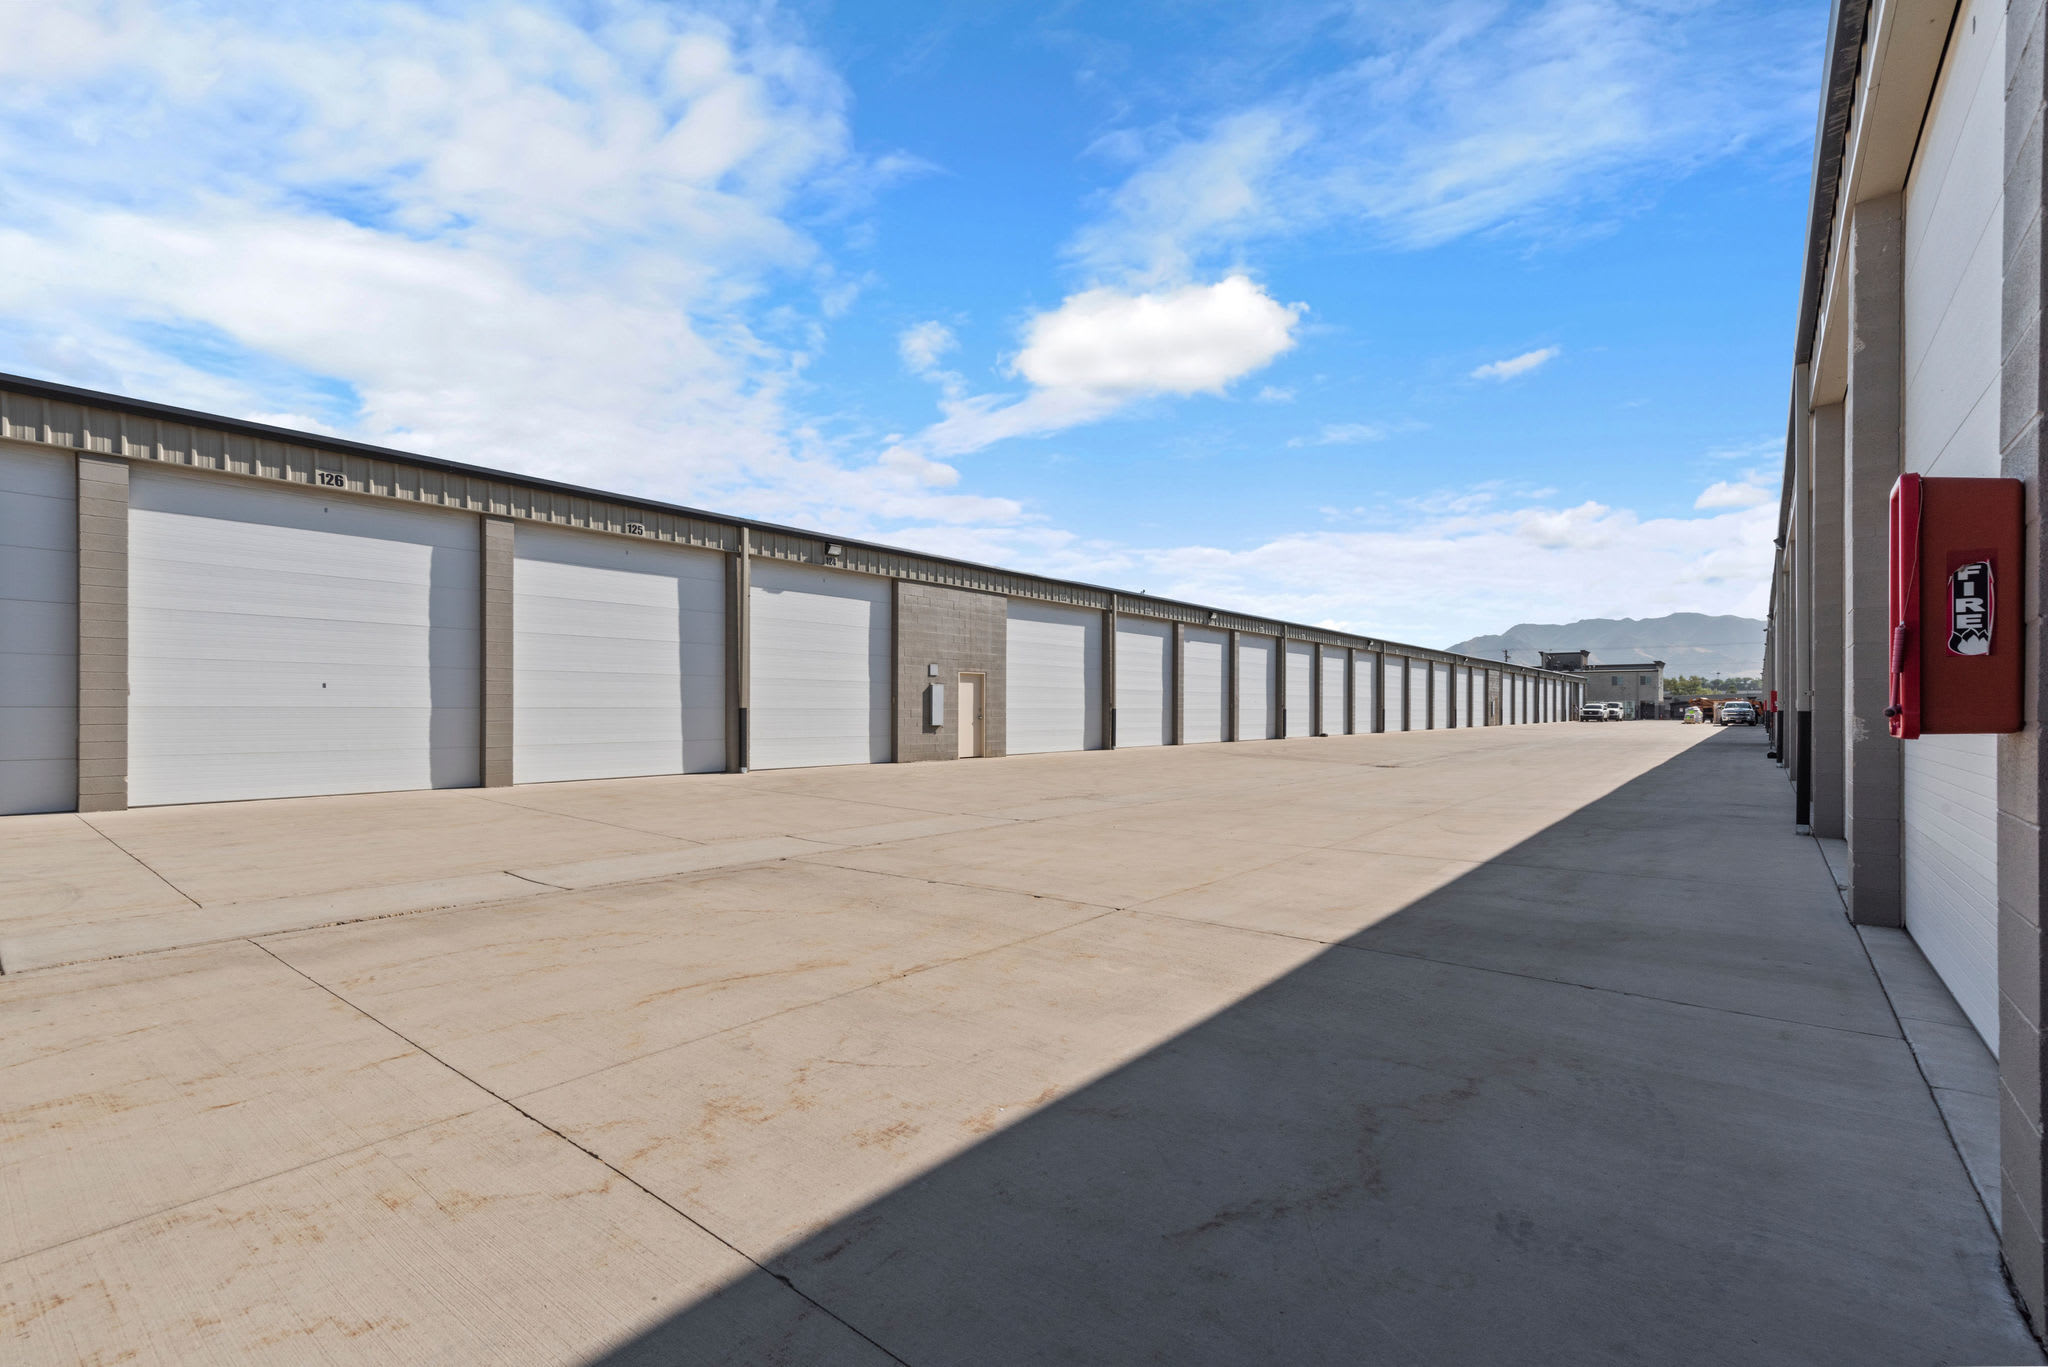 Drive up storage units at Stor'em Self Storage in Salt Lake City, Utah